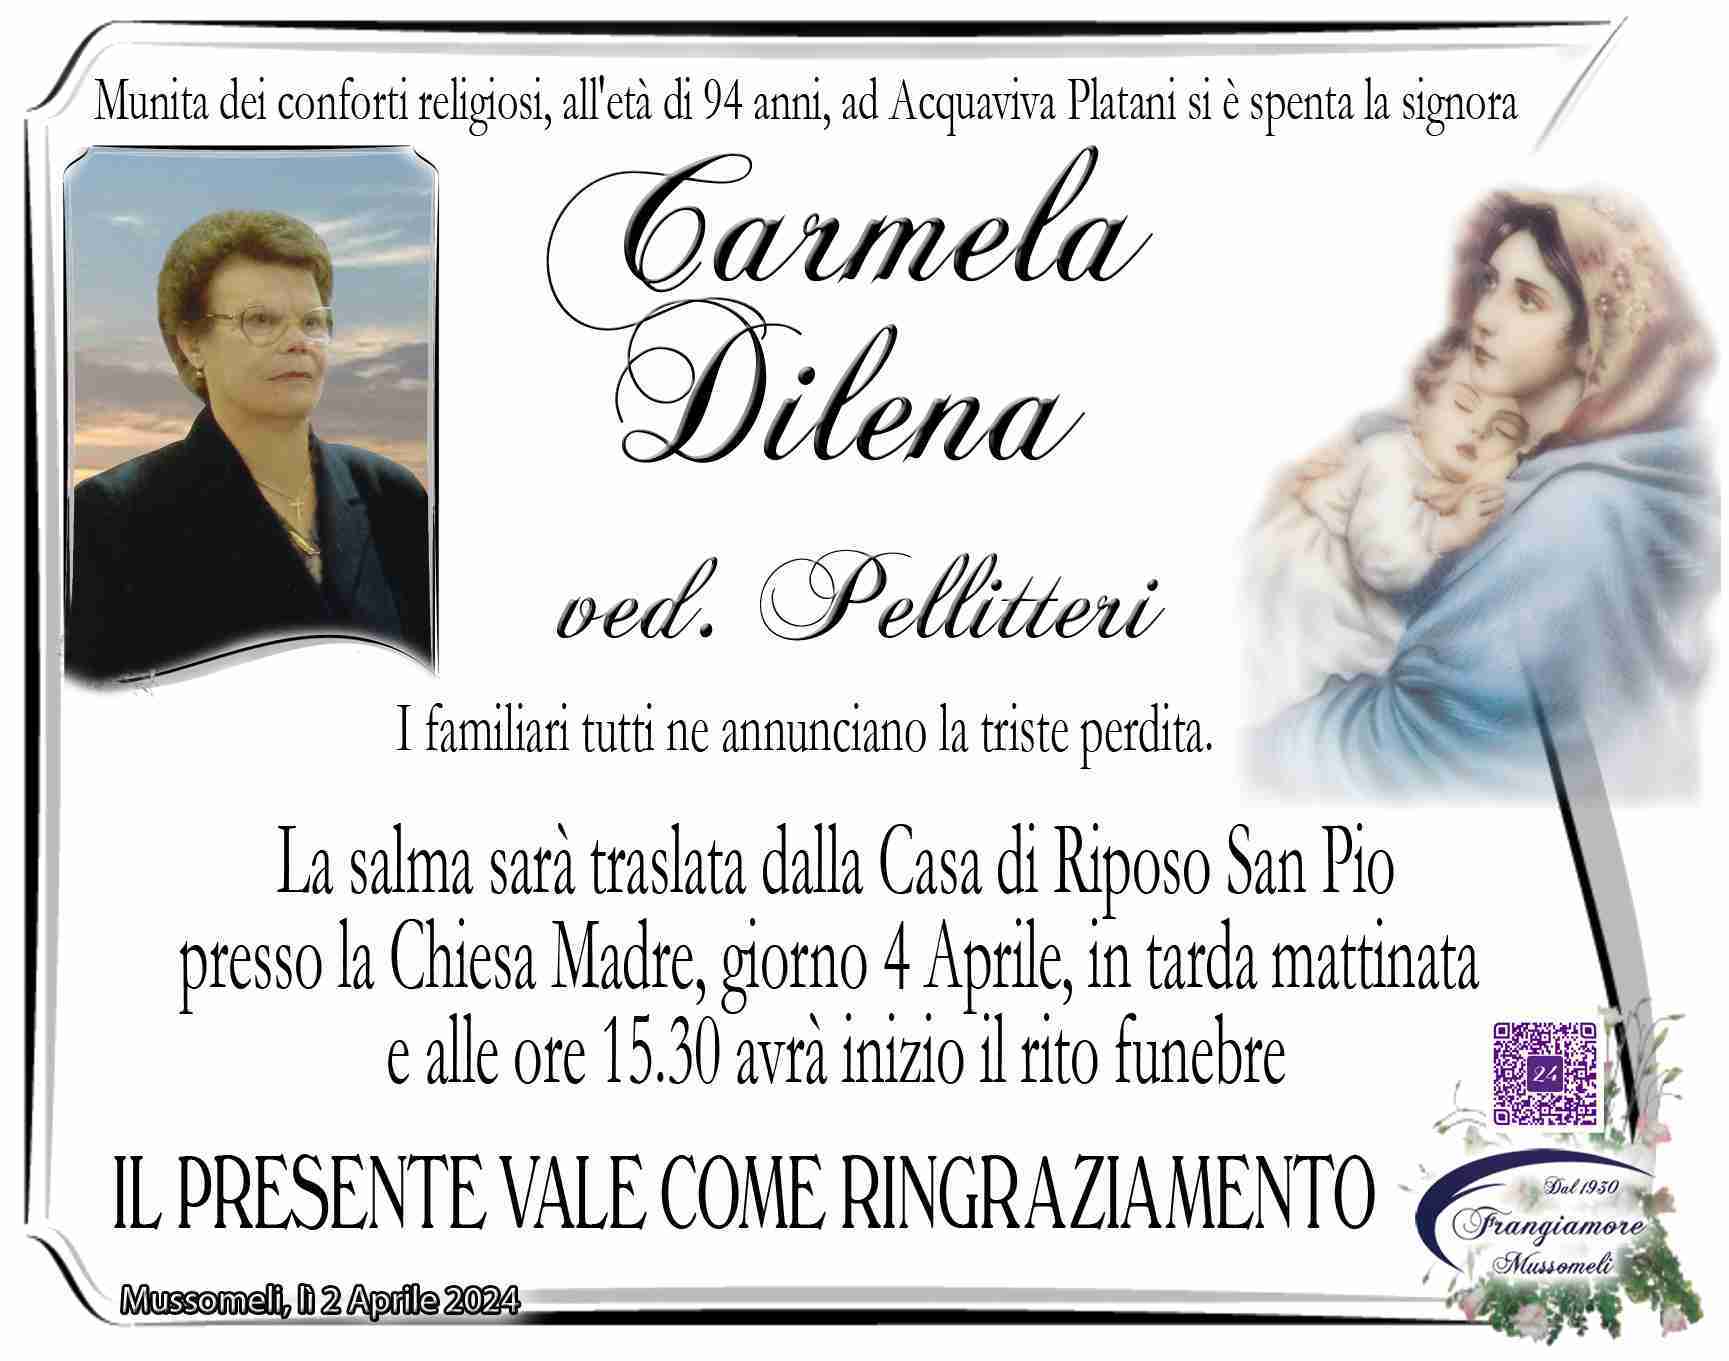 Carmela Dilena